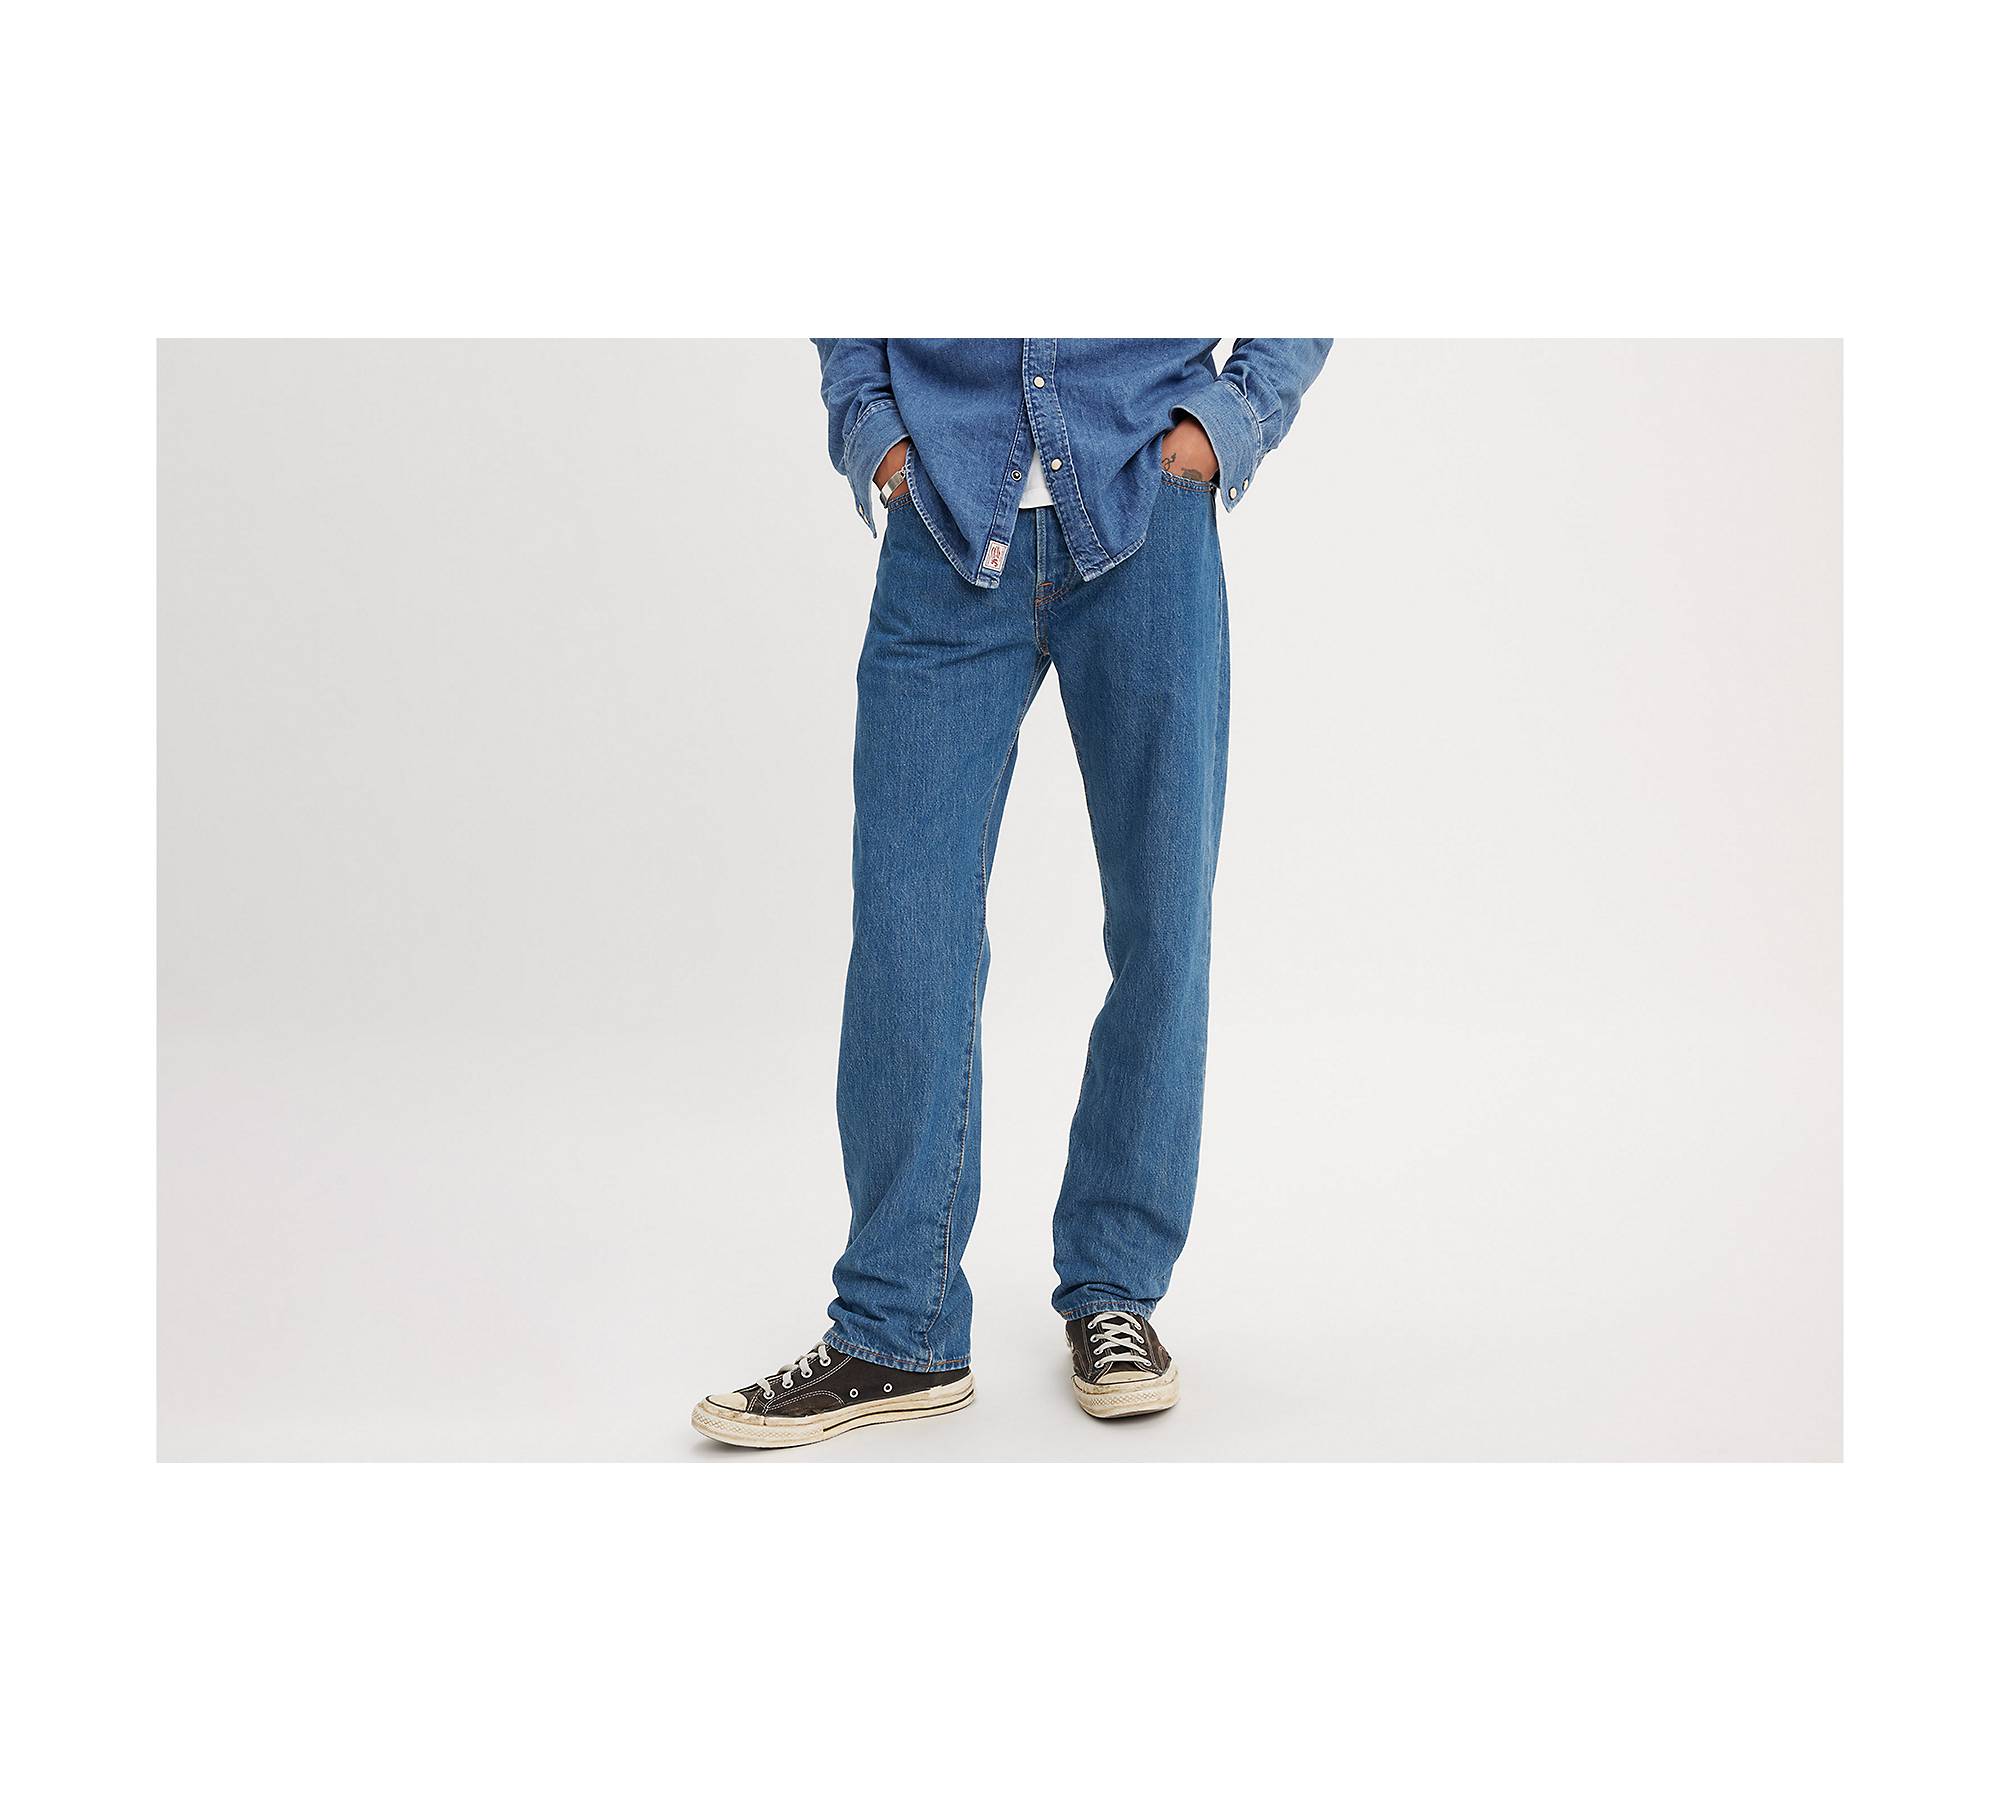 Vintage Levi's 501 Jeans, Button Fly, 5 Pocket Denim, Faded